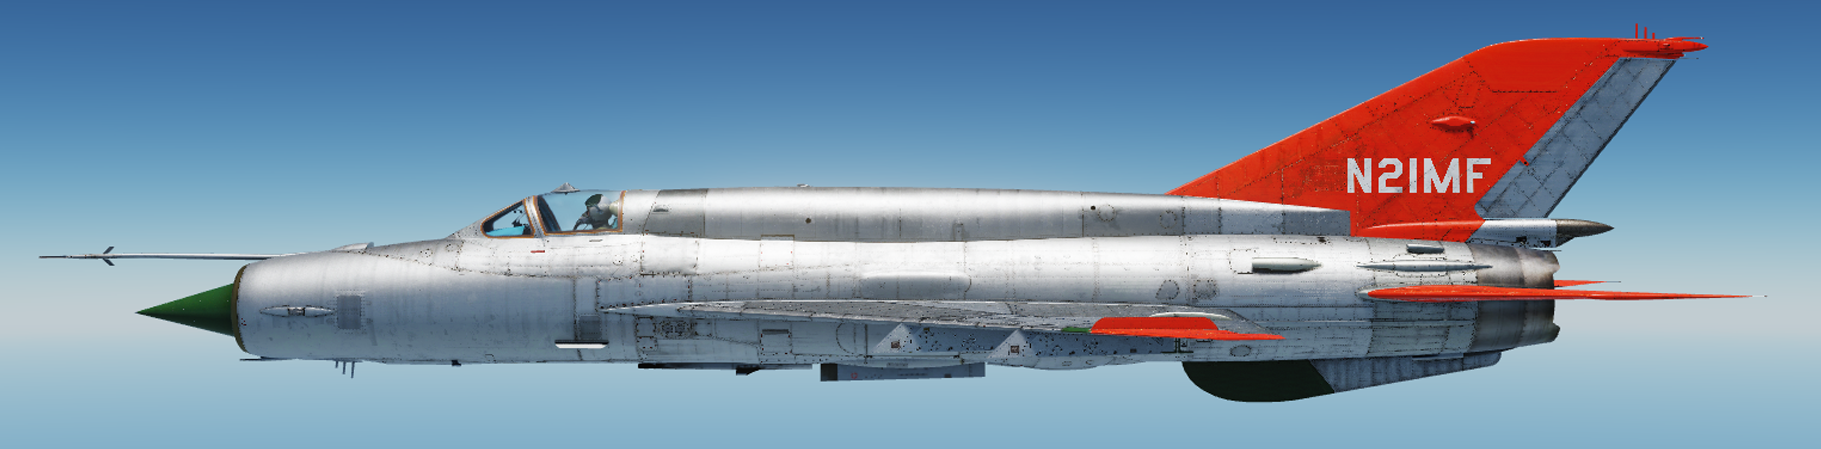 MiG-21, Tracor Systems, N21MF